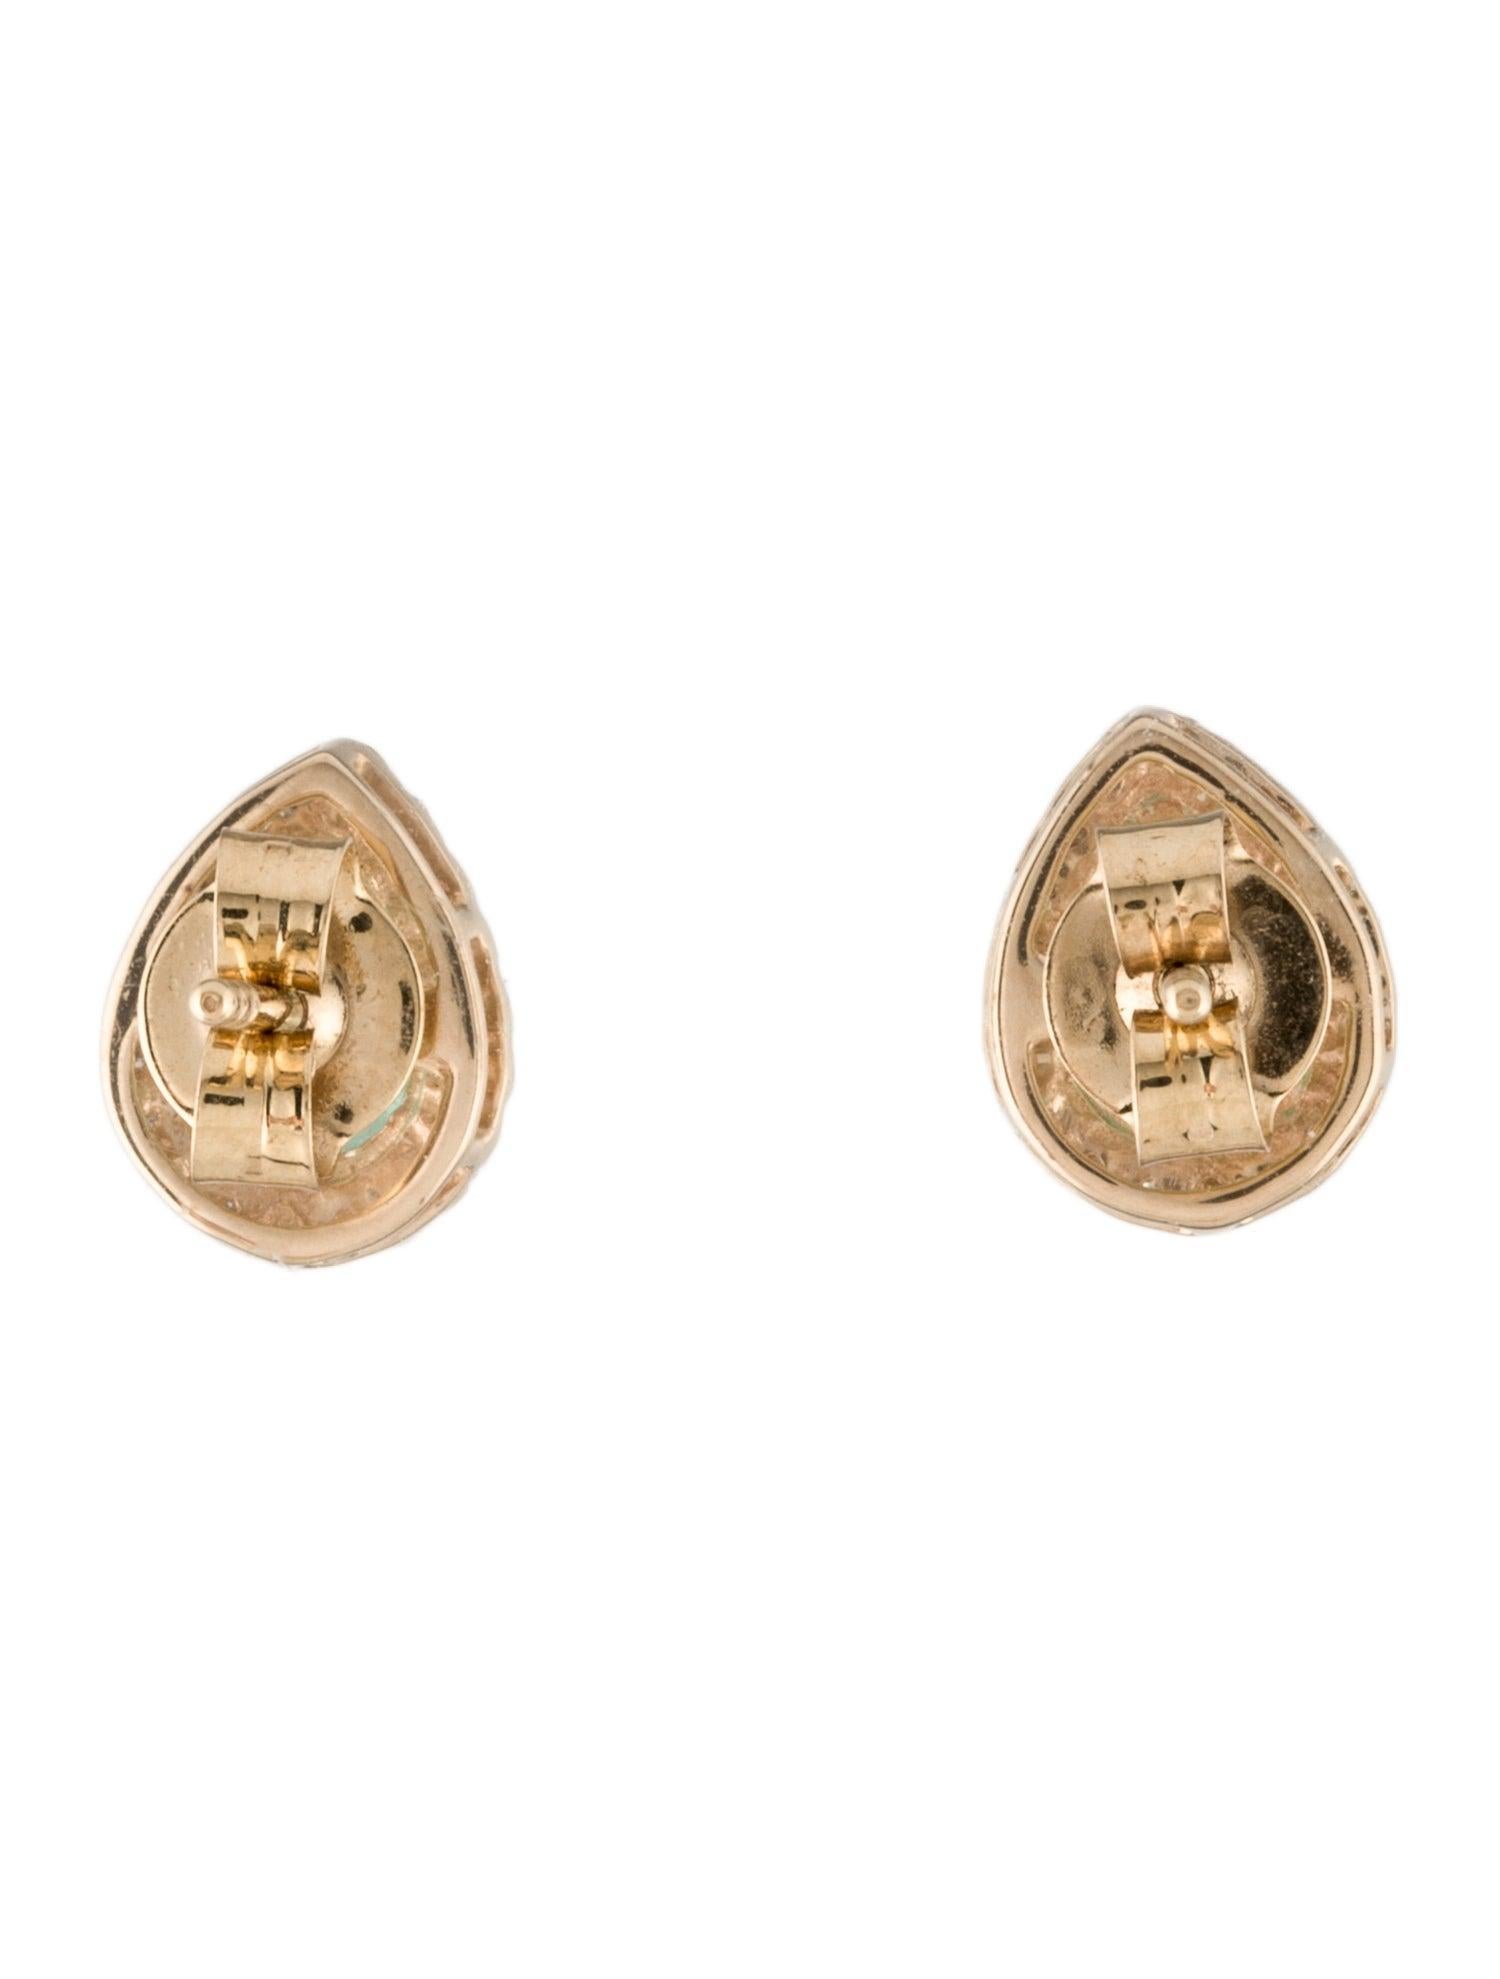 Pear Cut 14K Yellow Gold Emerald & Diamond Stud Earrings, 1.30ct Pear-Shaped Emeralds